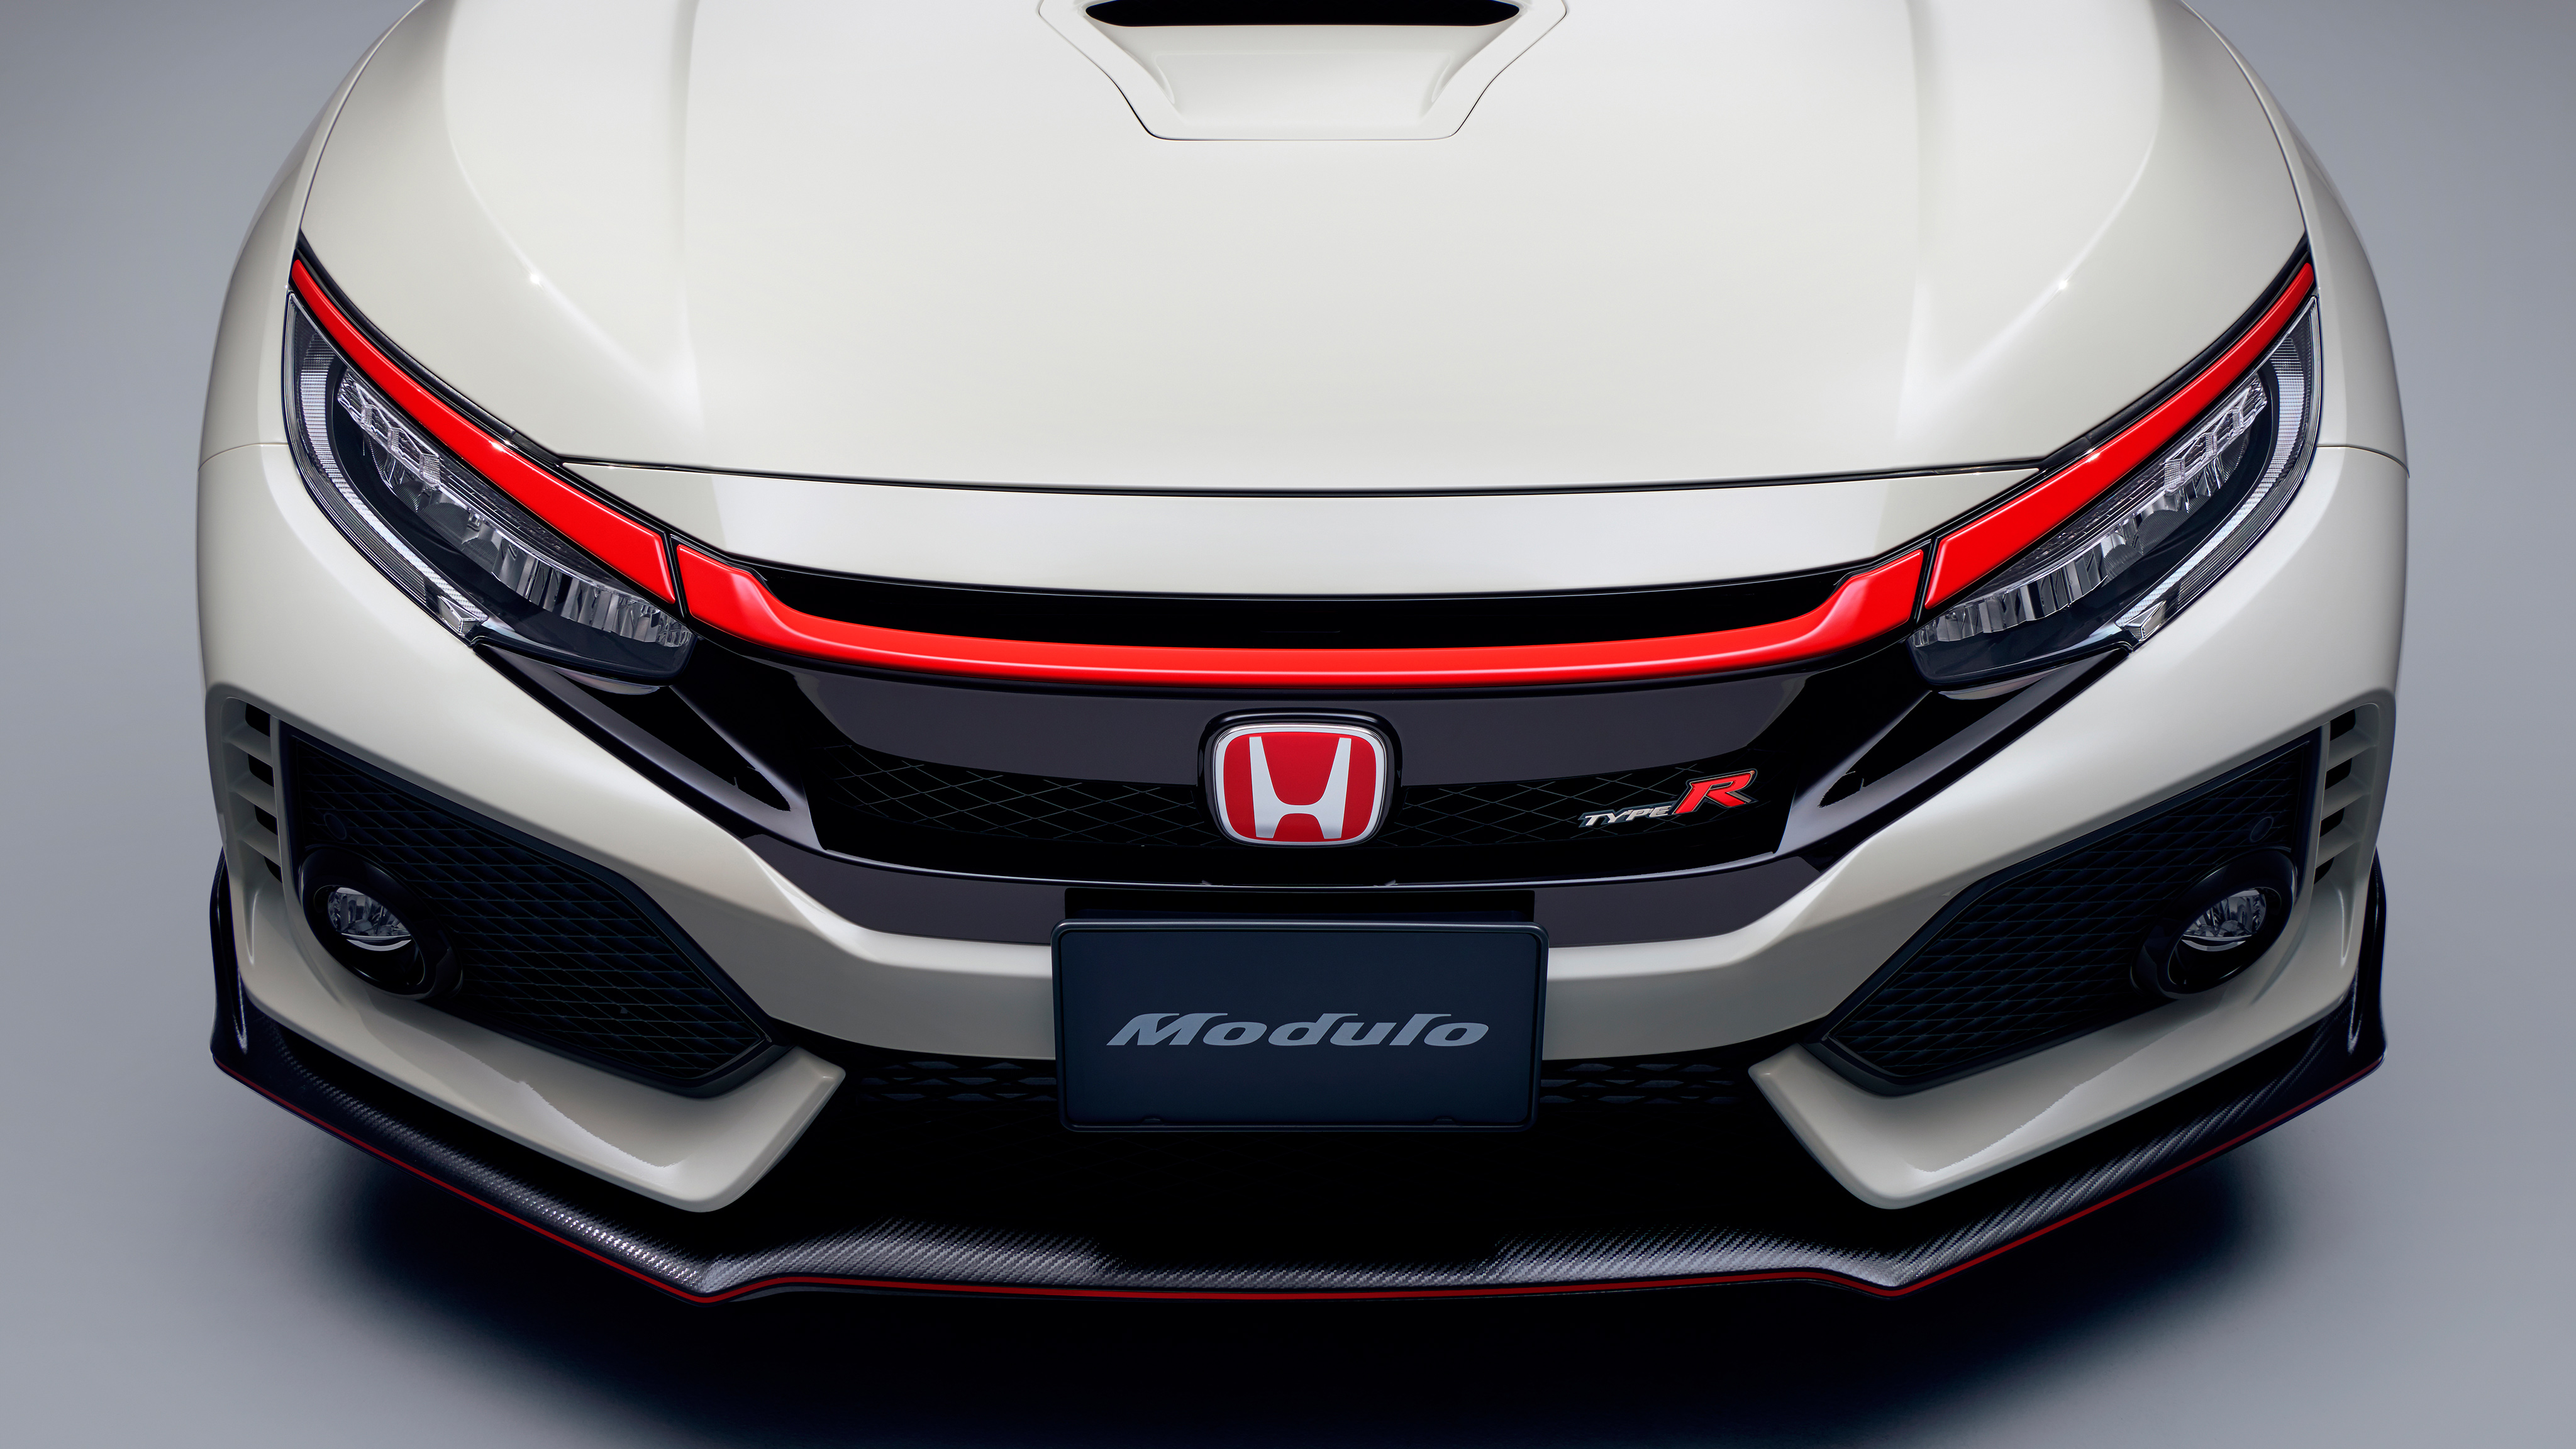 Honda Civic Type R modern 2017